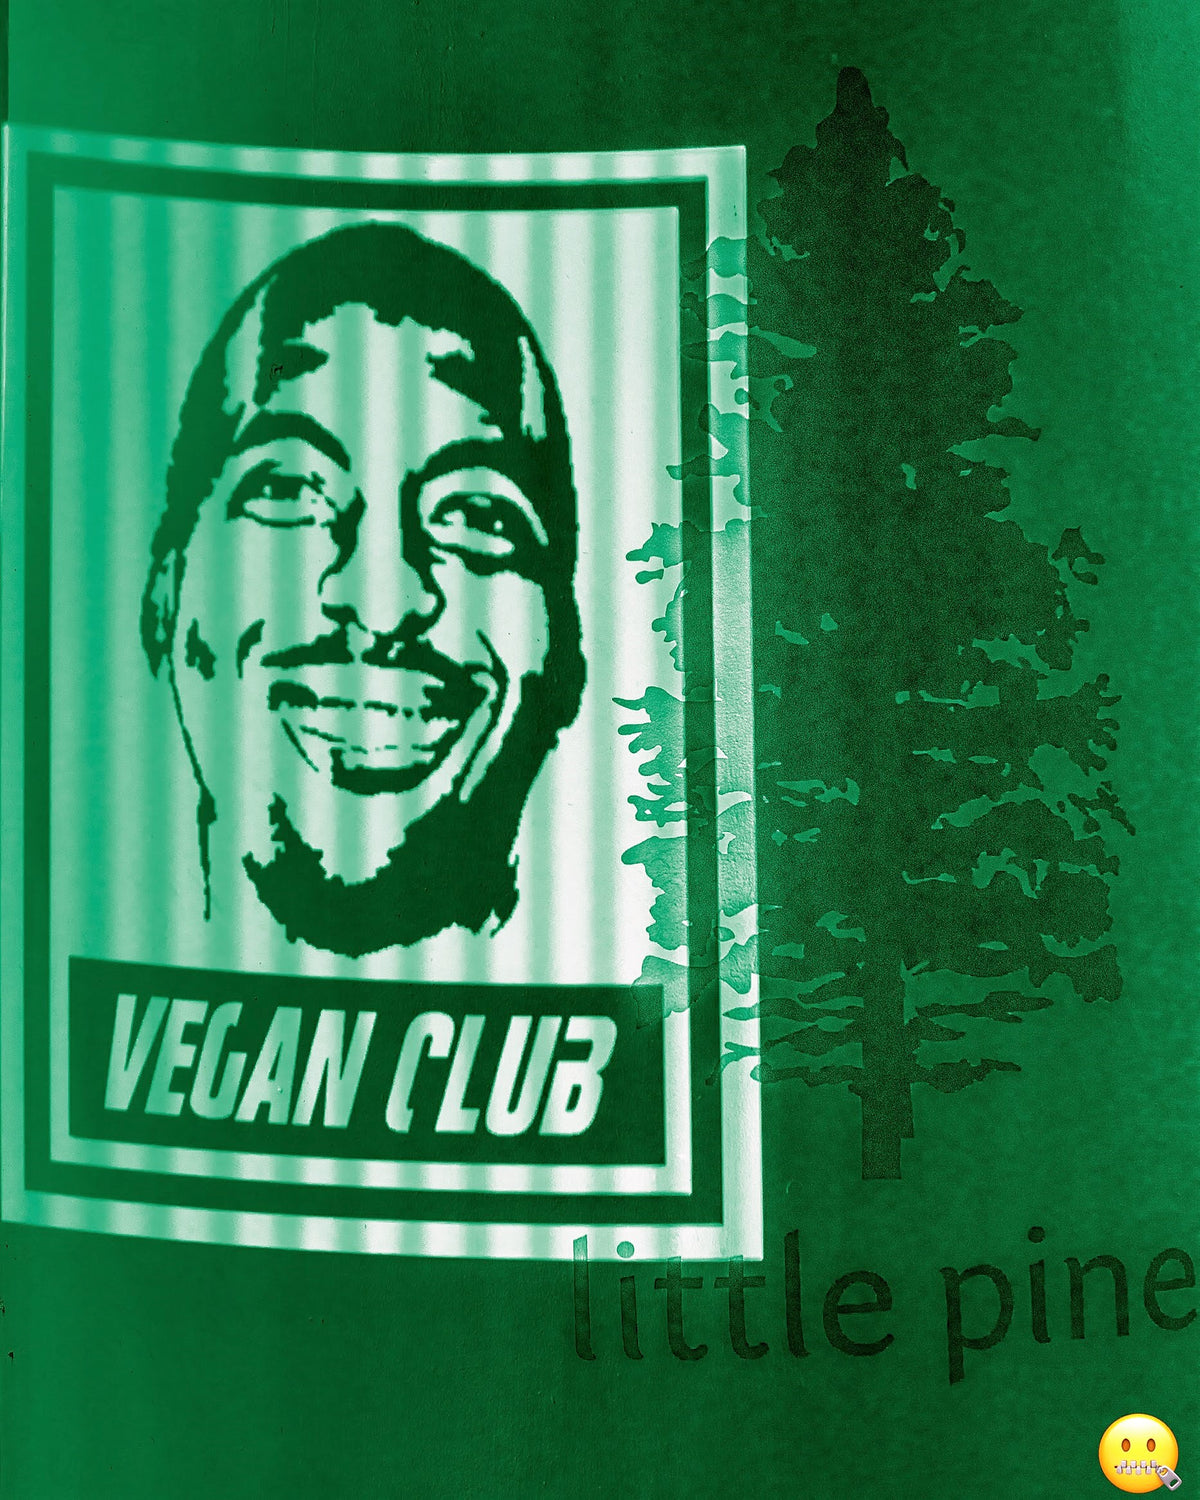 Street Art NewsPrint Poster Vegan Club featuring John Salley Signed L3f0u - pic by @chefitophoto